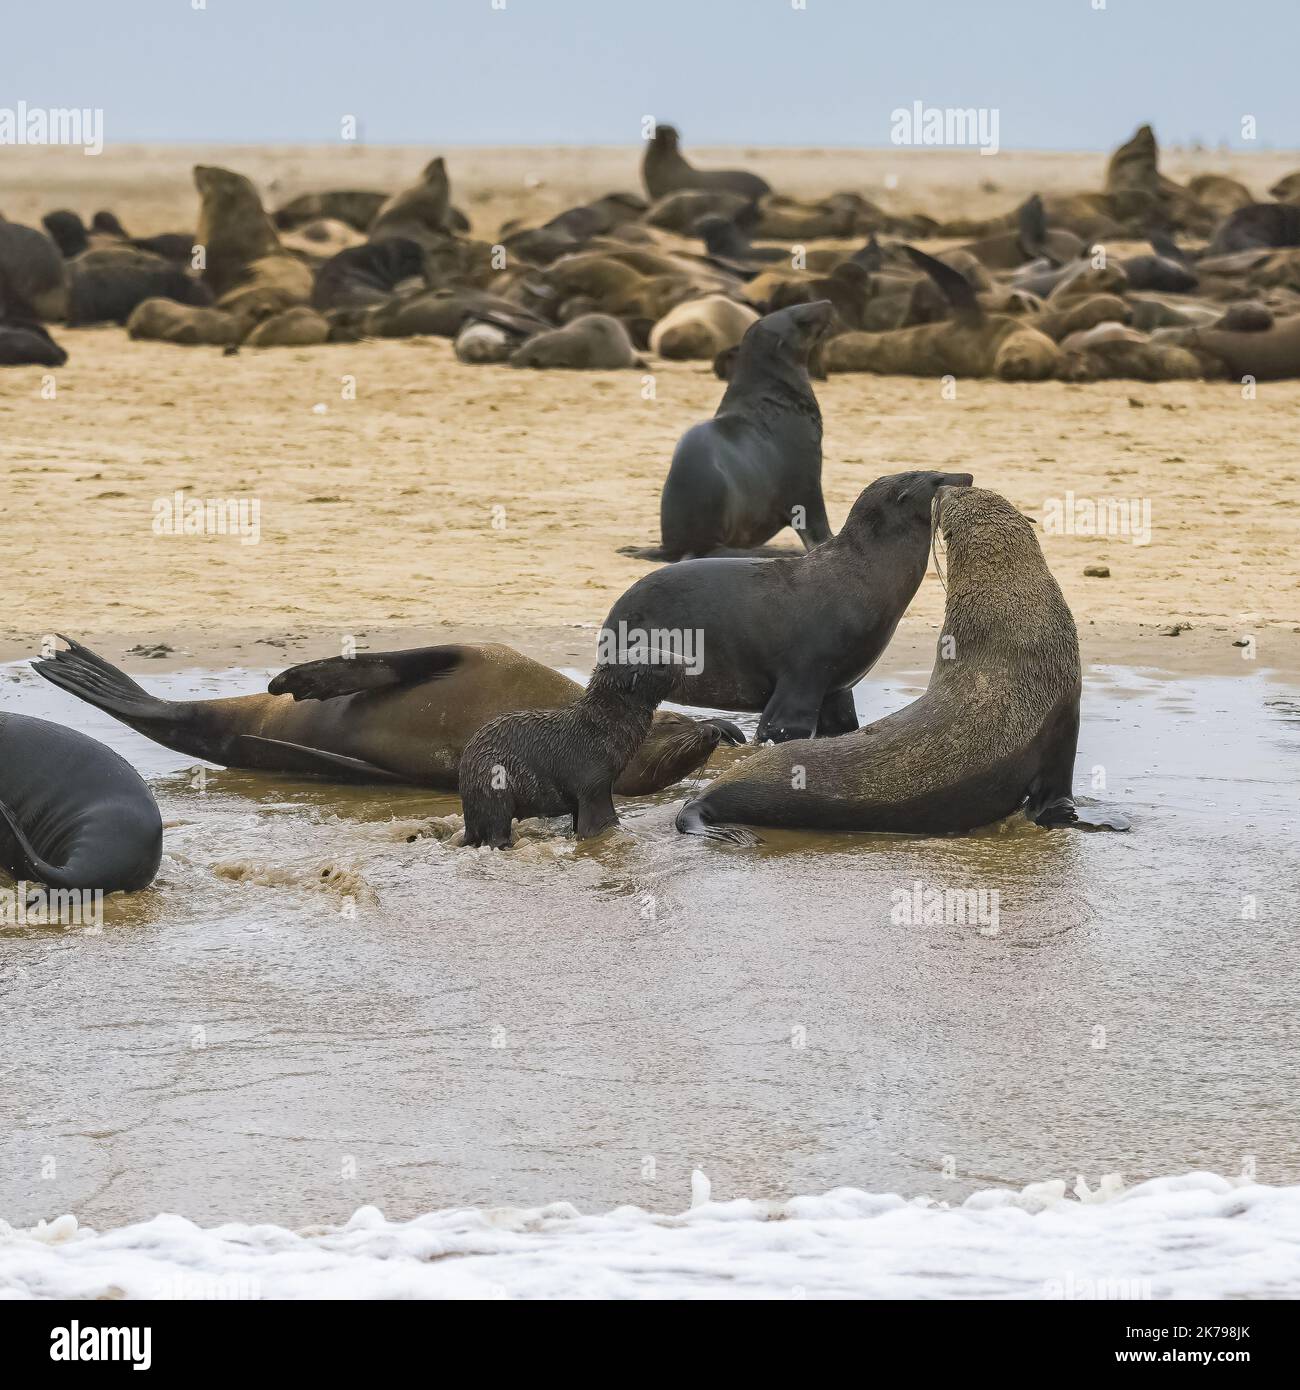 Cape fur seal, Arctocephalus pusillus pusillus, family with babies on a beach in Namibia Stock Photo